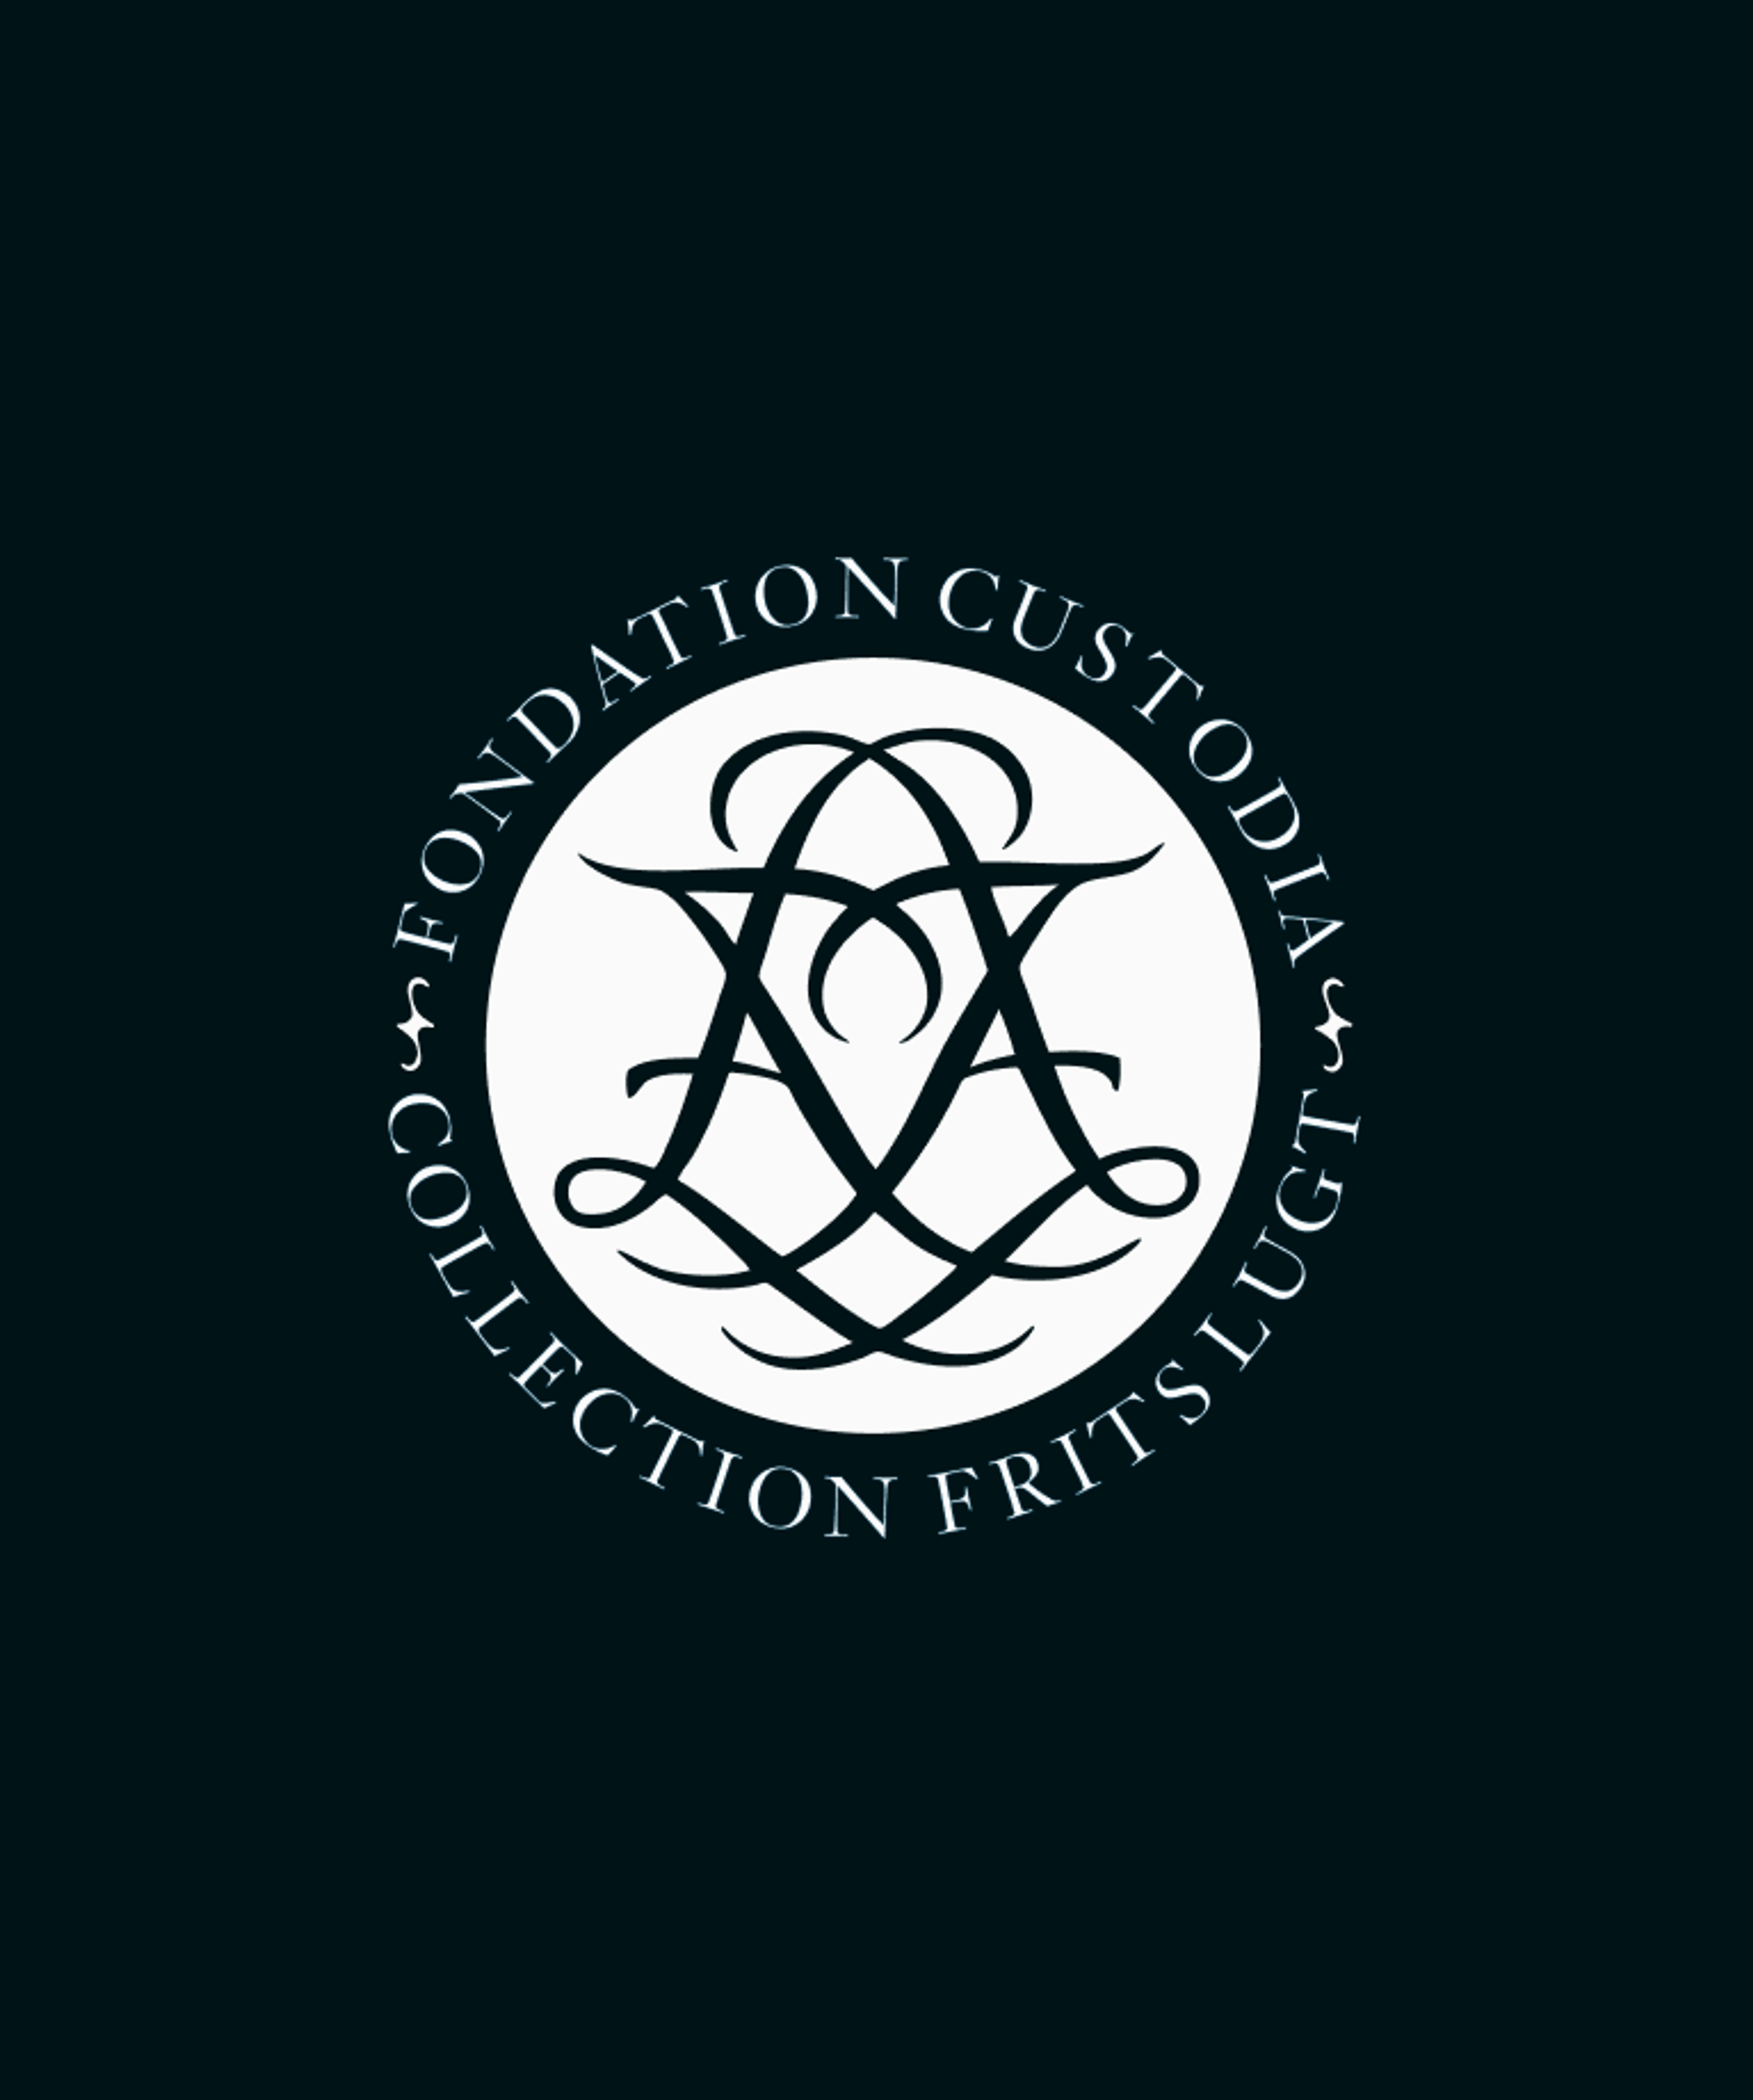 Foundation Custodia logo